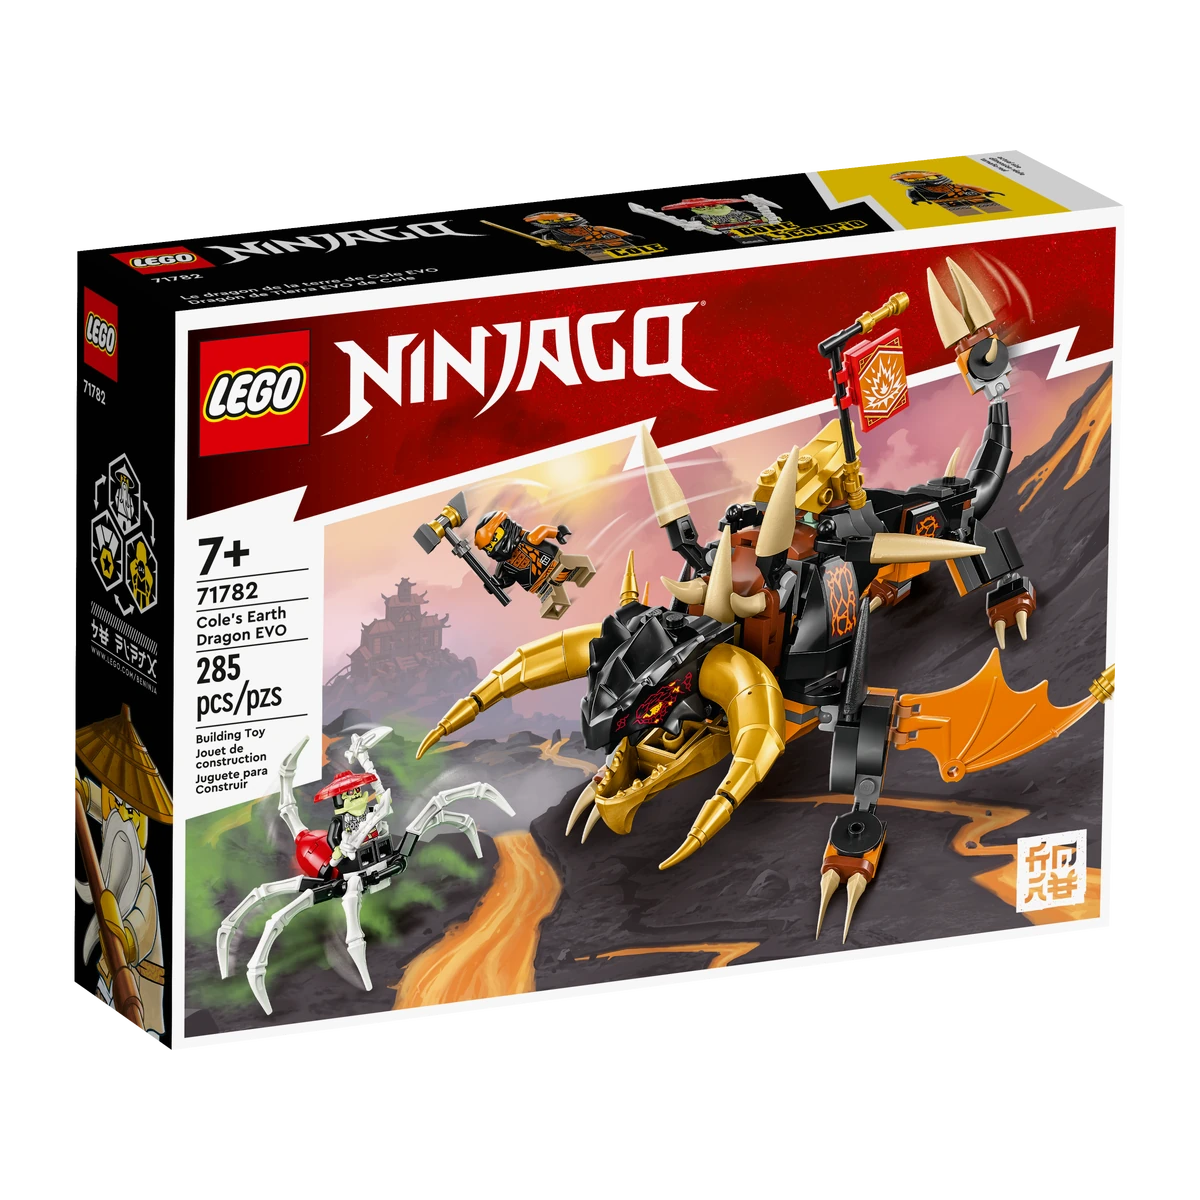 Lego Ninjago Cole’s Earth Dragon Evo